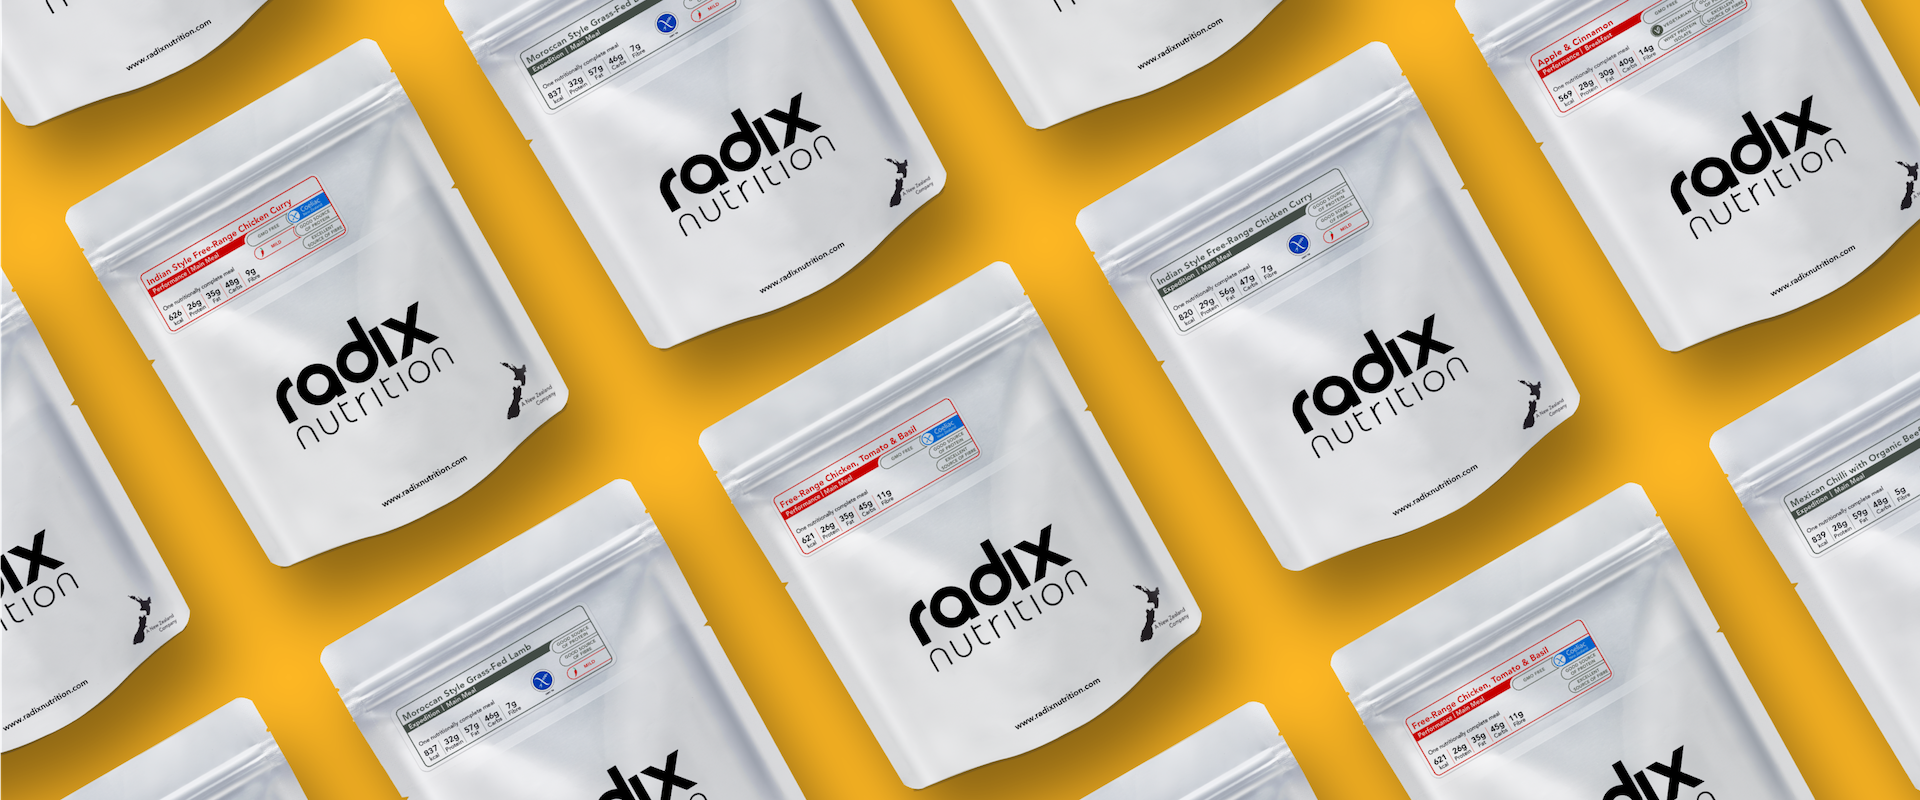 Radix Nutrition Packaging Design